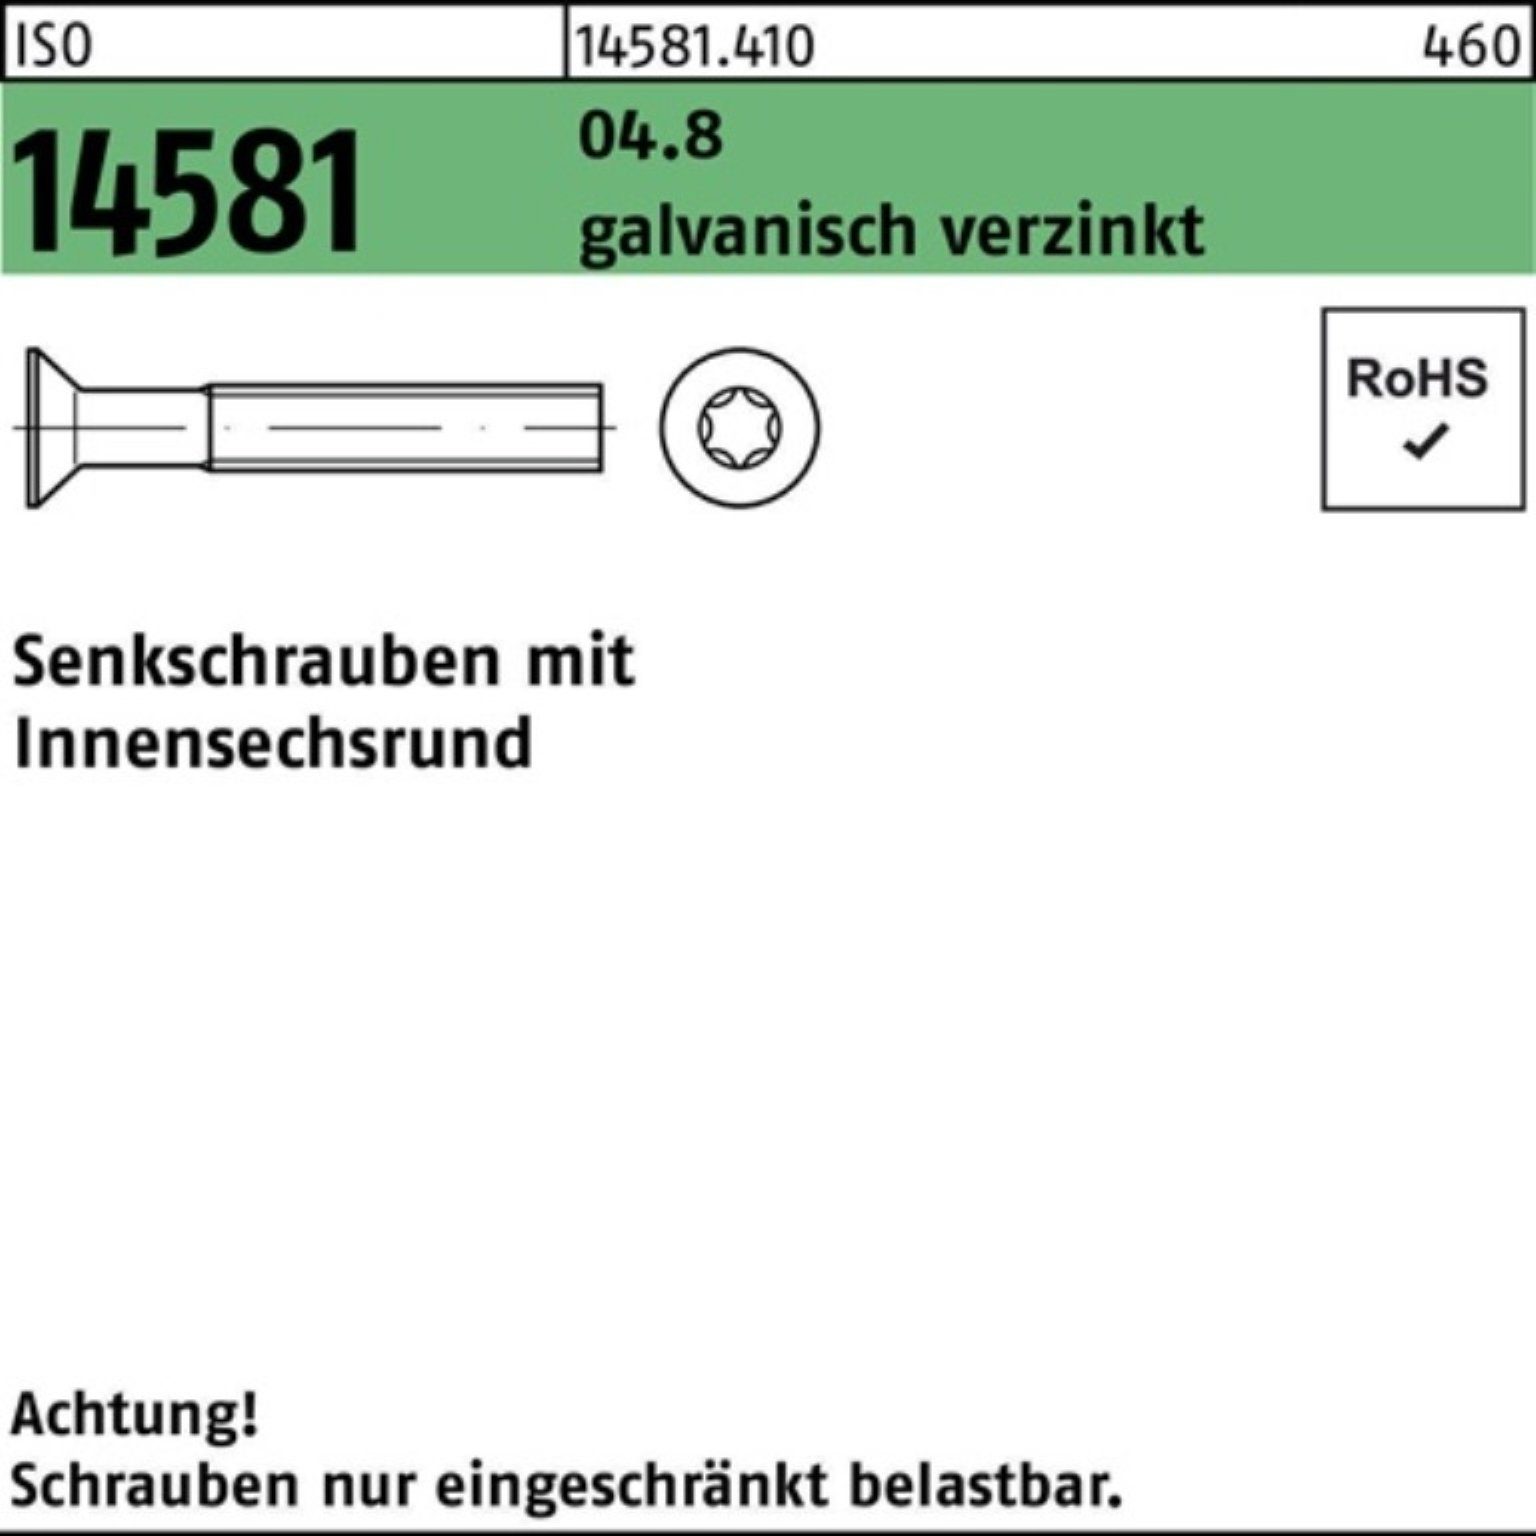 Reyher Senkschraube 2000er Pack 2000St T25 M5x8 ISR ISO galv.verz. 14581 04.8 Senkschraube